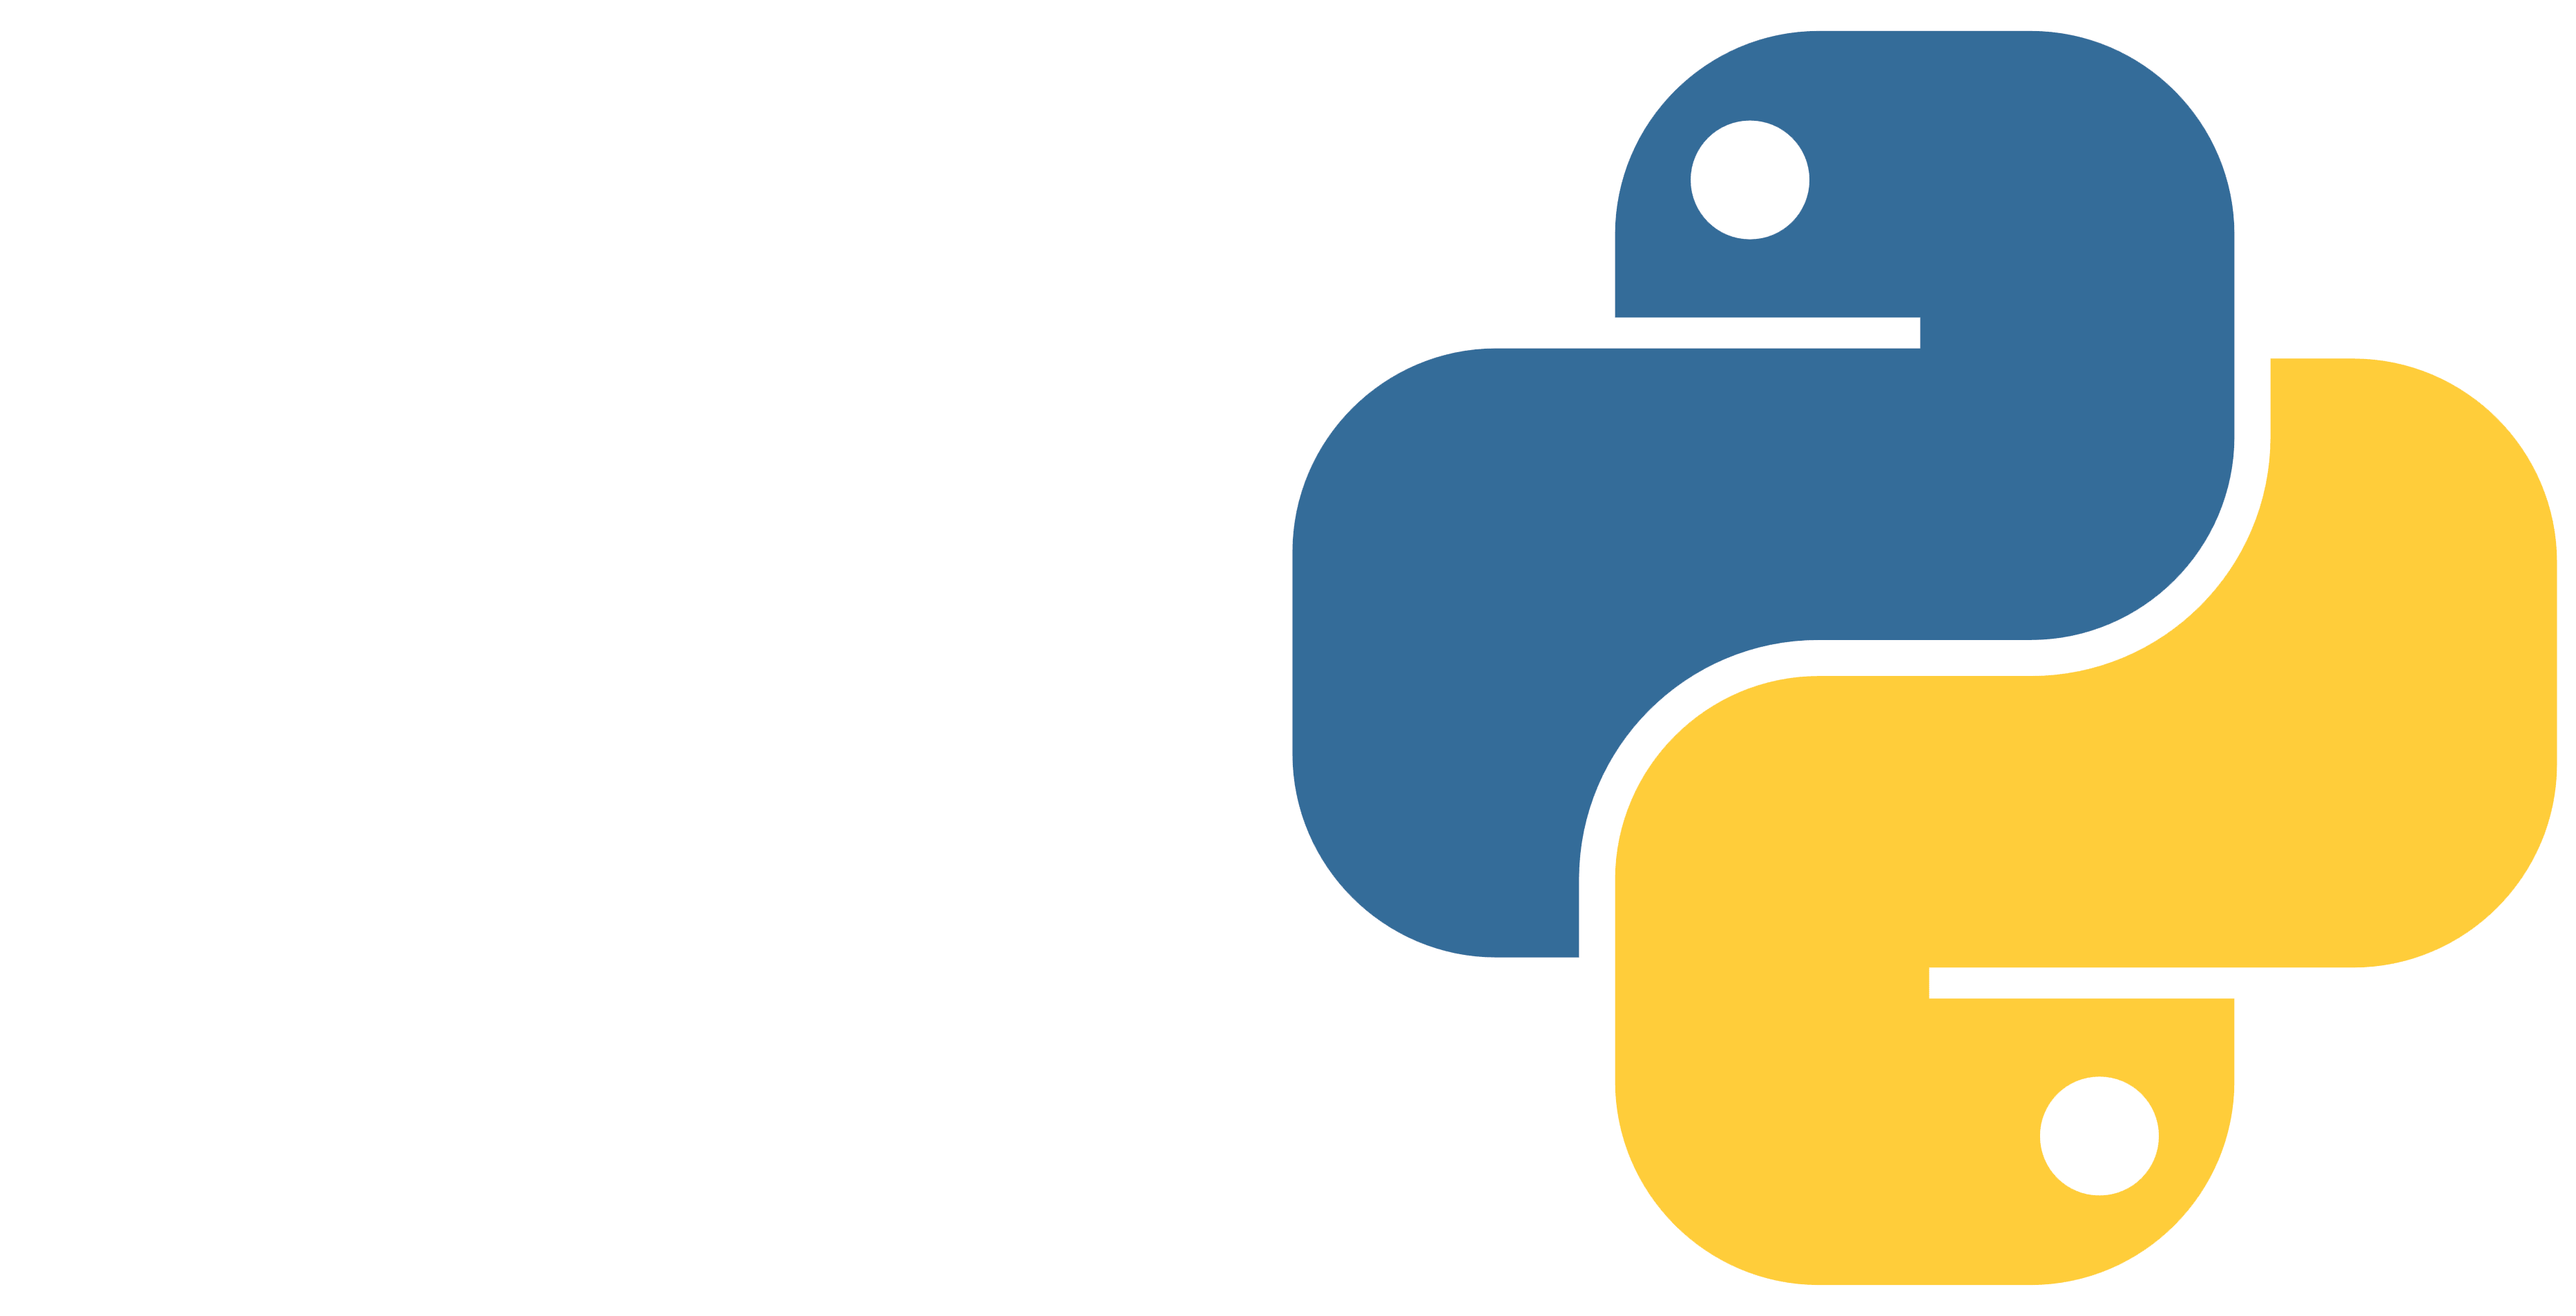 Python Essentials I & II